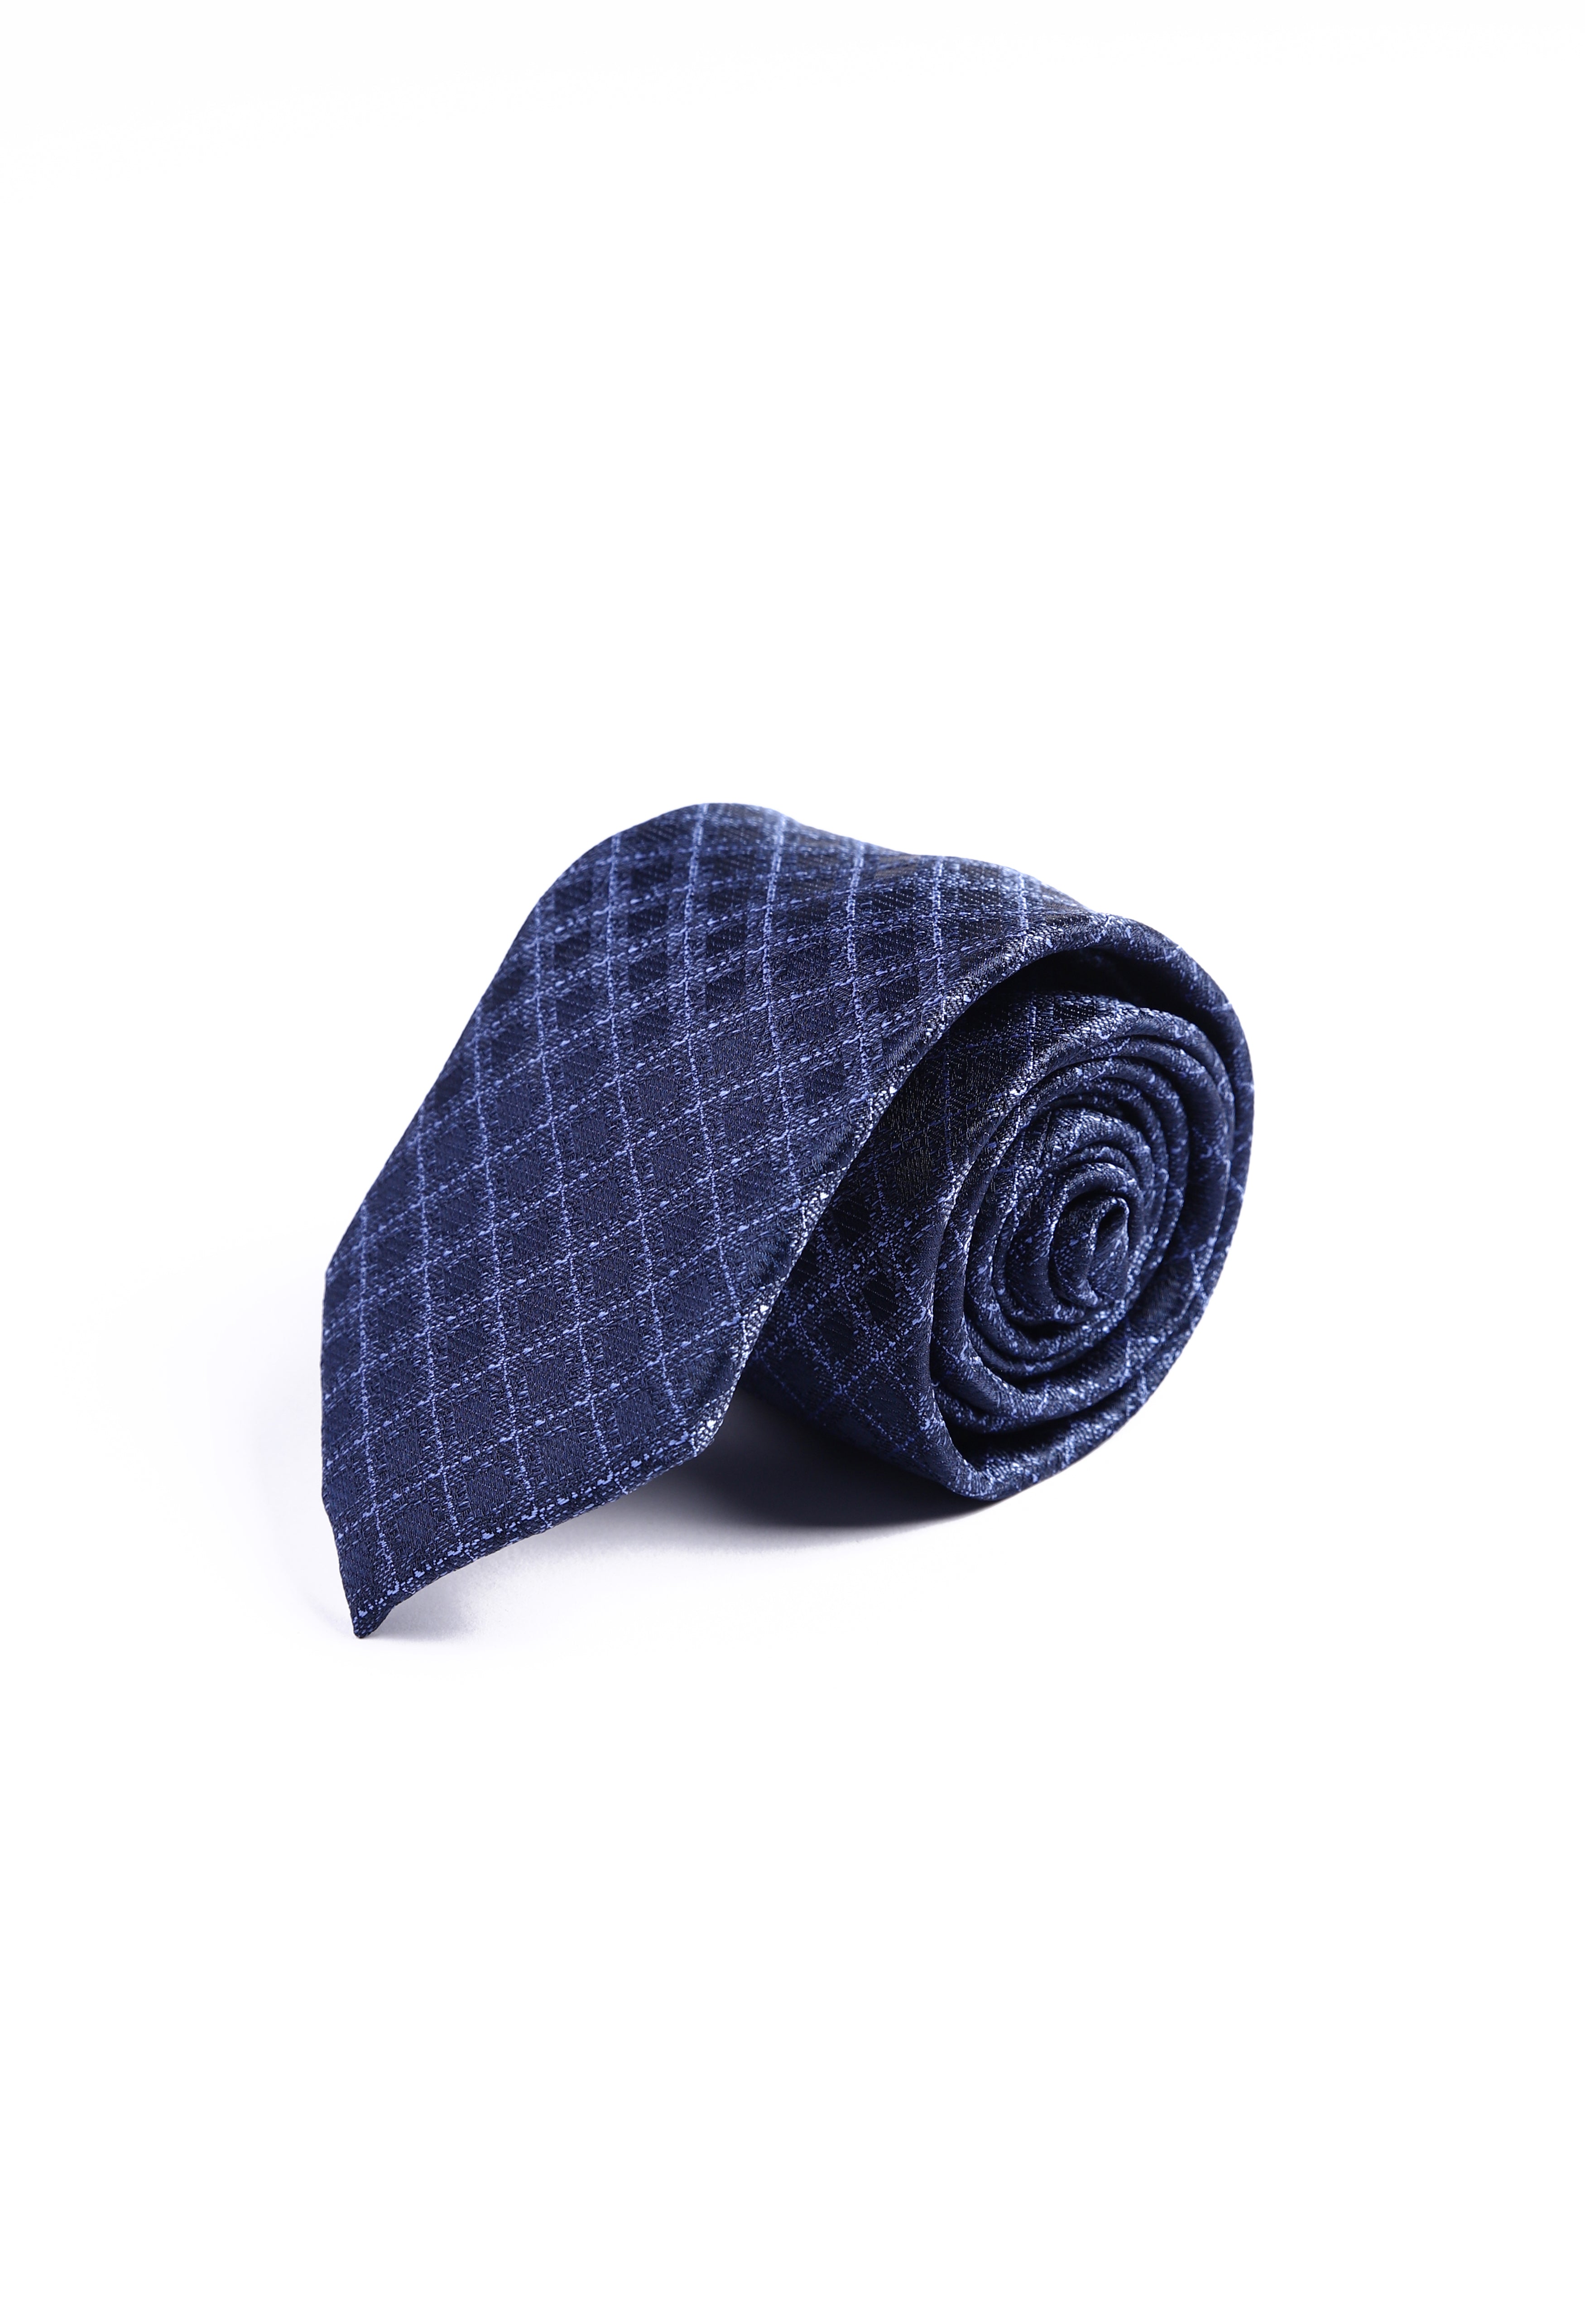 Egyptian Blue Check Tie (TIE-000017)